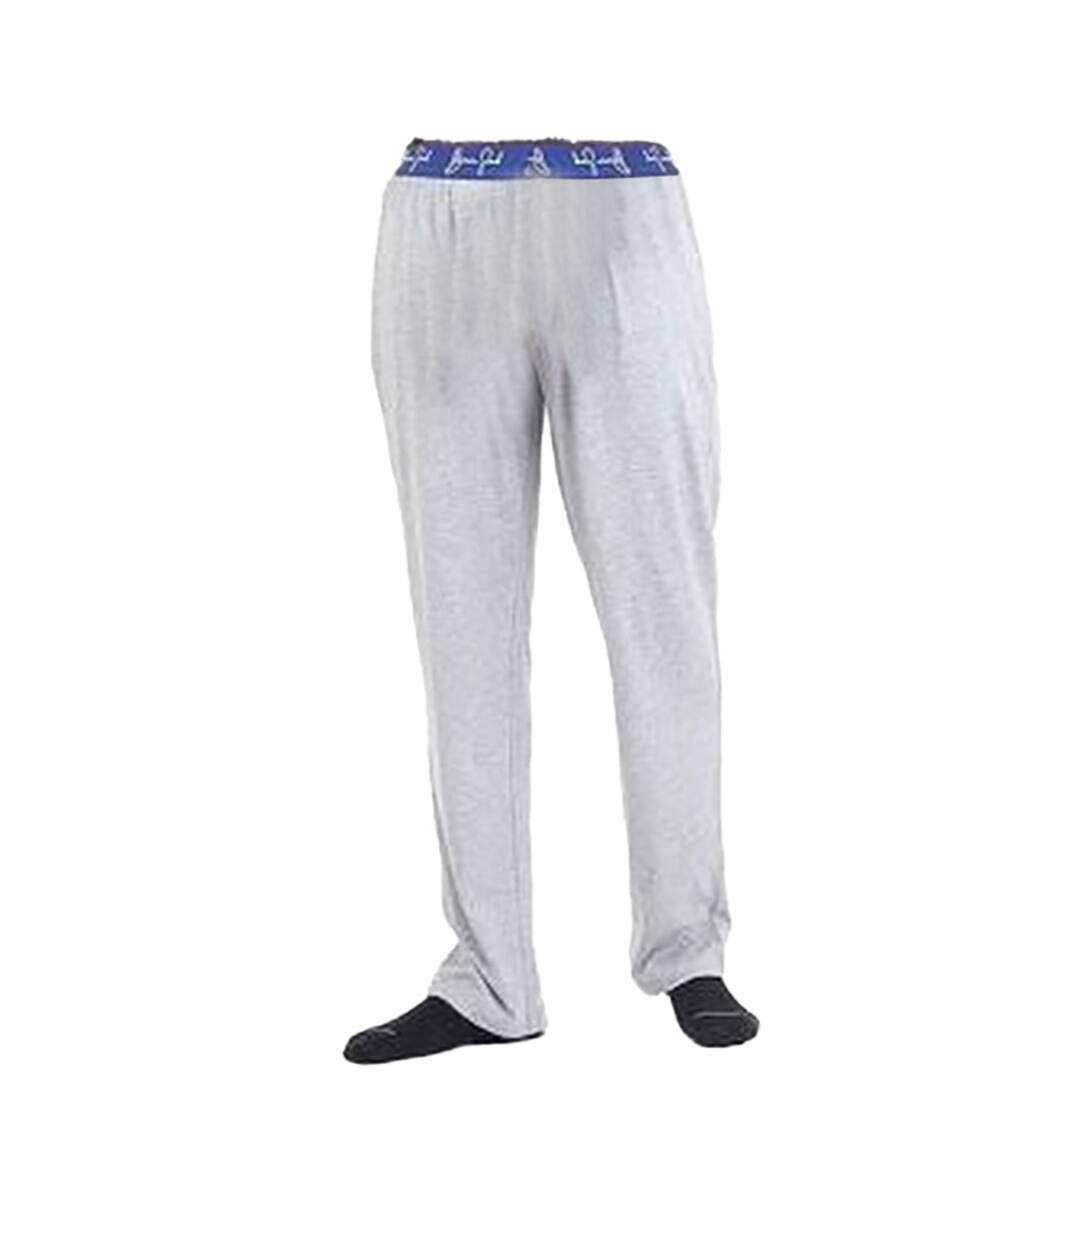 Brave Soul - Pantalon de pyjama - Homme (Gris/bleu roi) - UTUT915